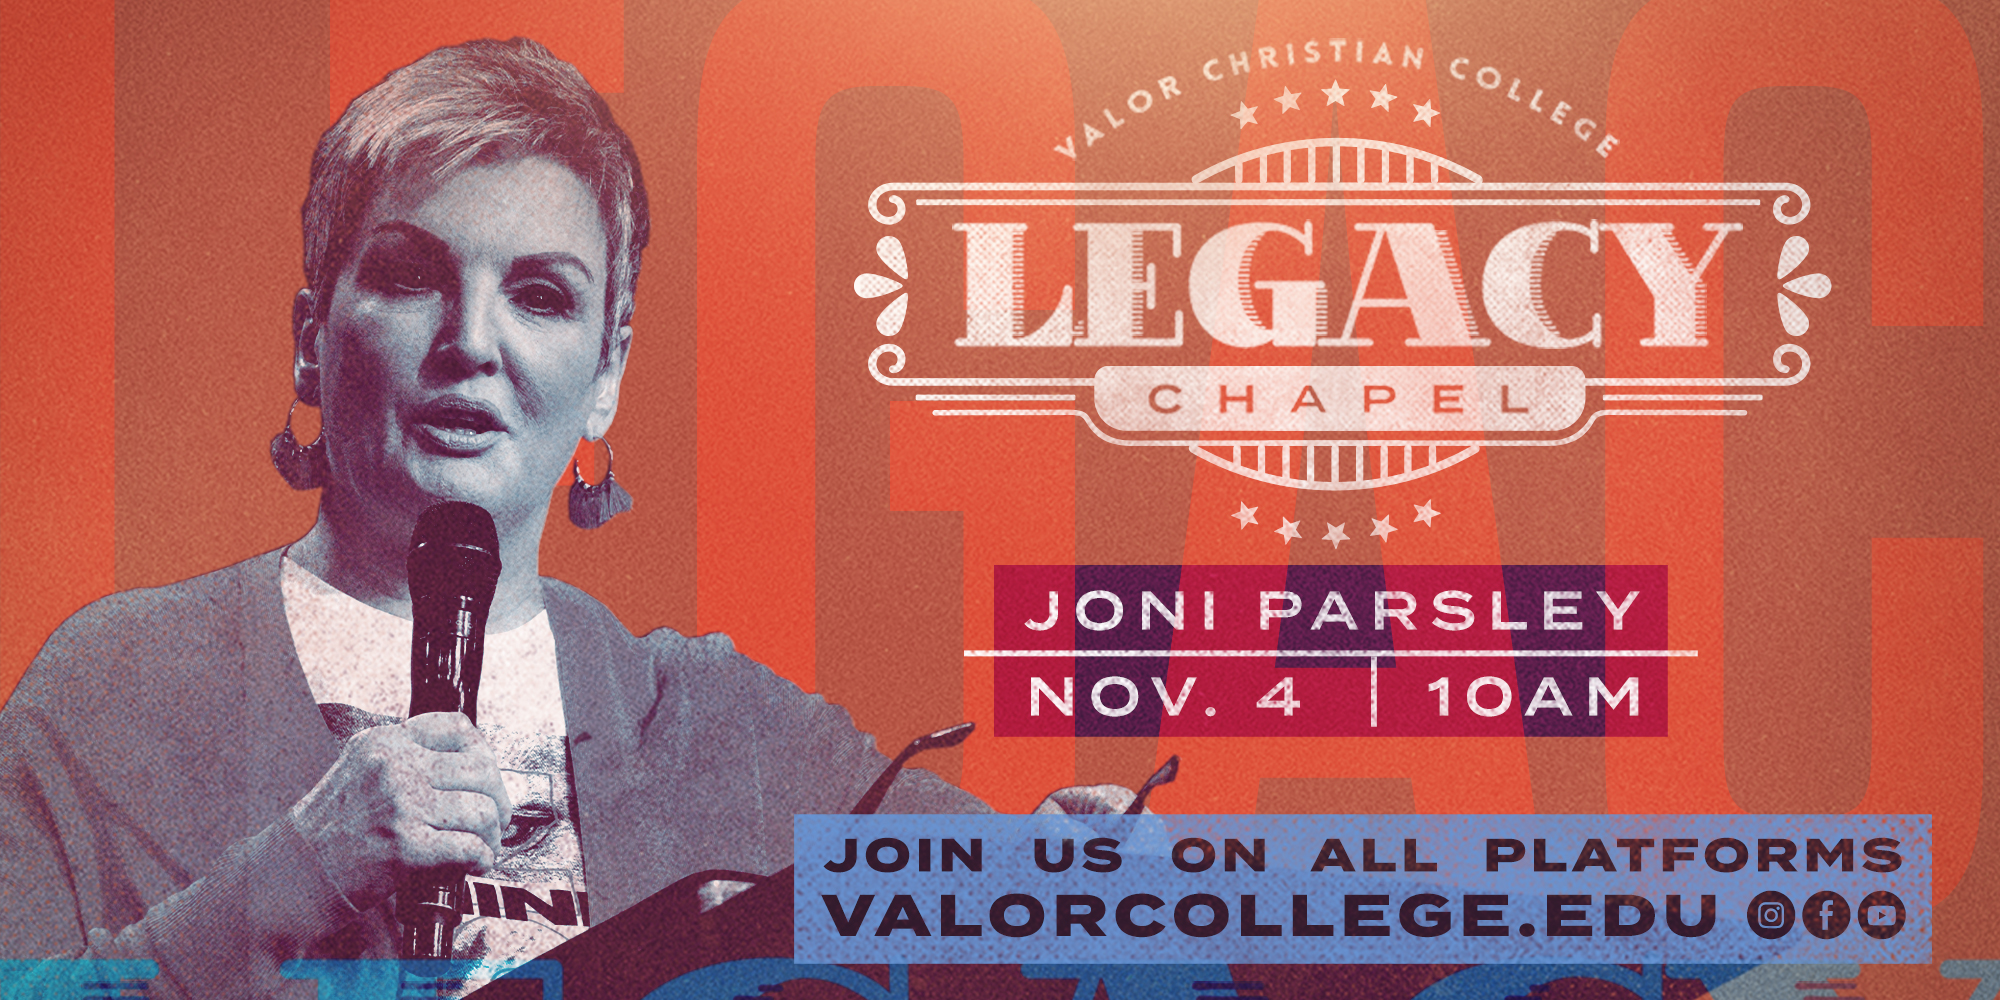 Valor Christian College Legacy Chapel Joni Parsley November 4th 10AM Join us on all platforms valorcollege.edu Instagram Facebook Youtube